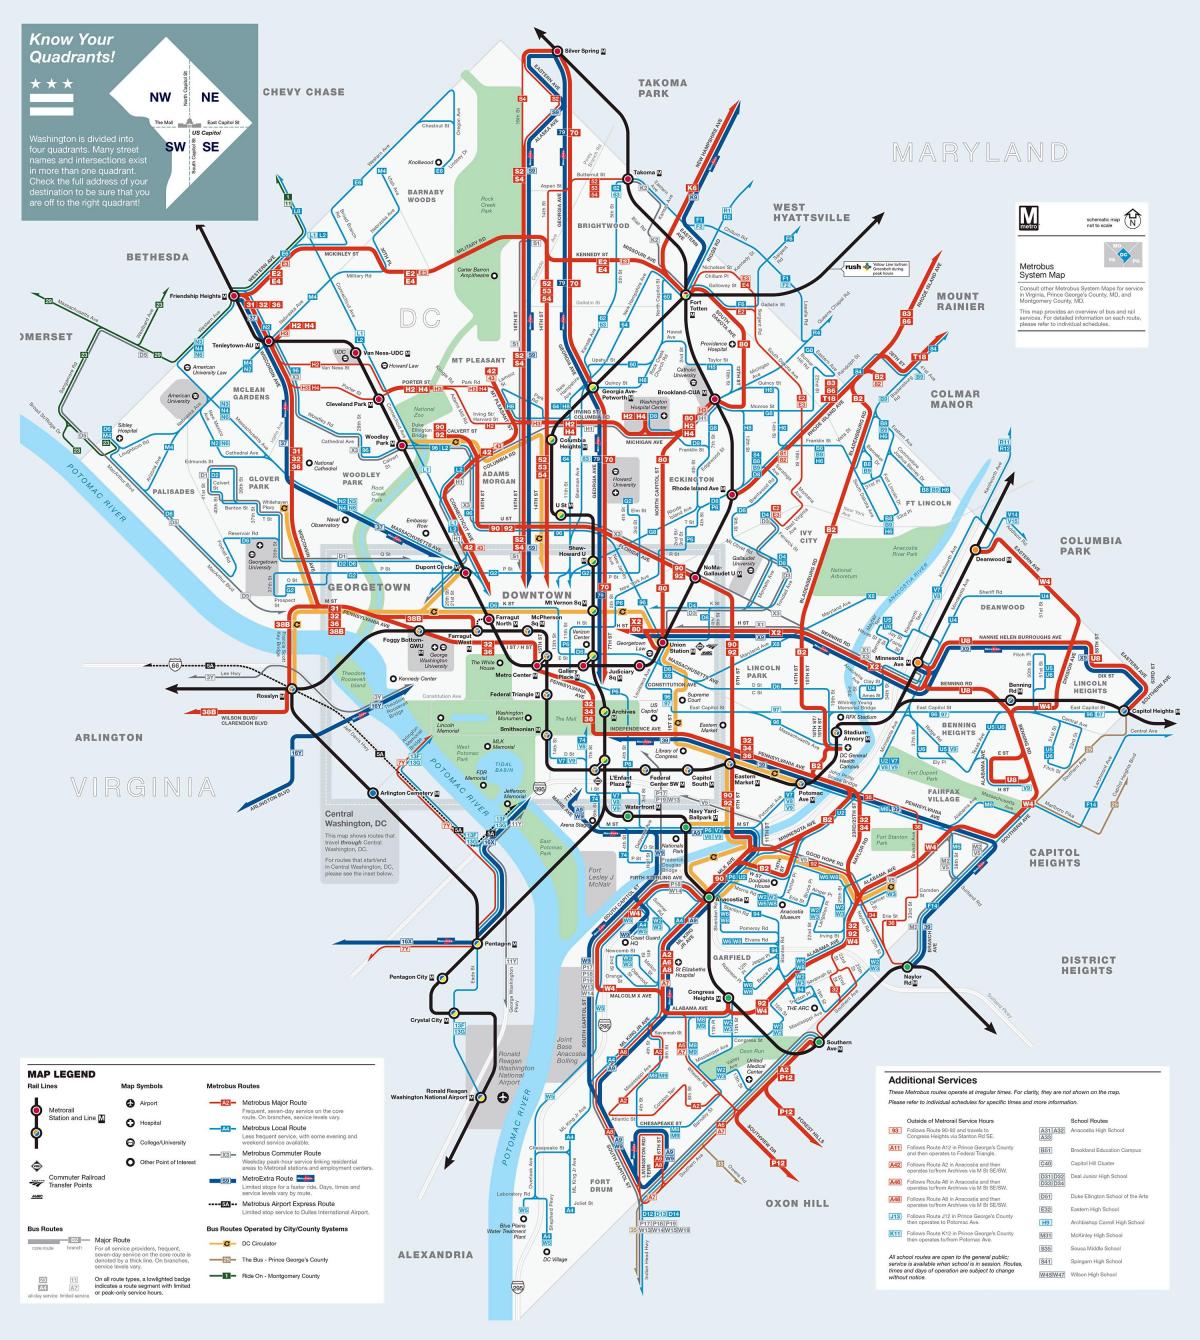 Washington DC transportation map